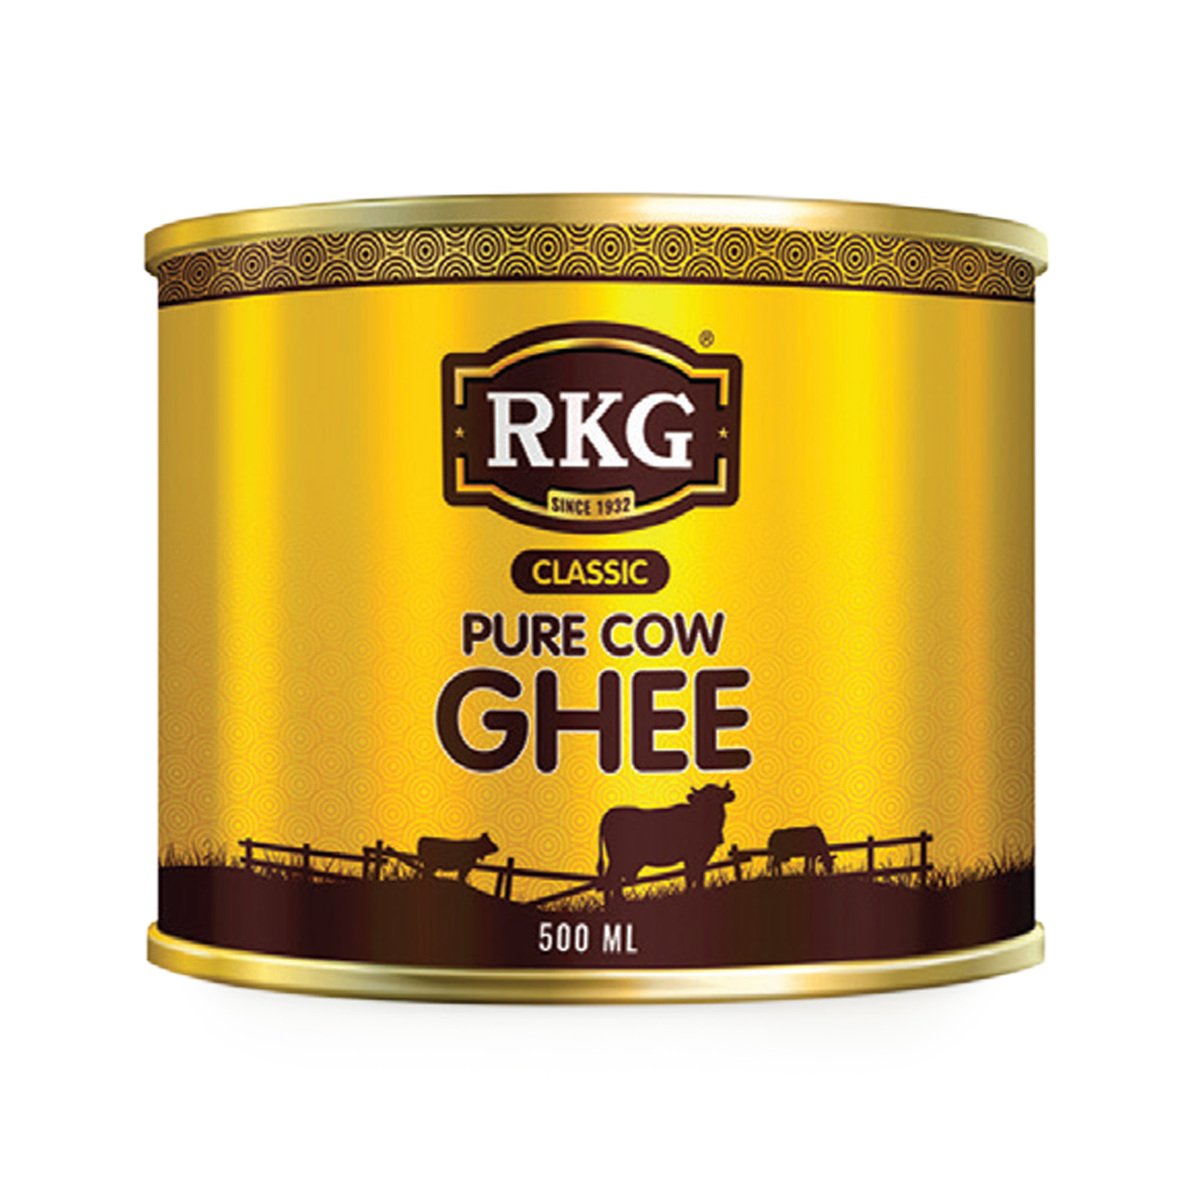 RKG Classic Pure Cow Ghee 500 ml